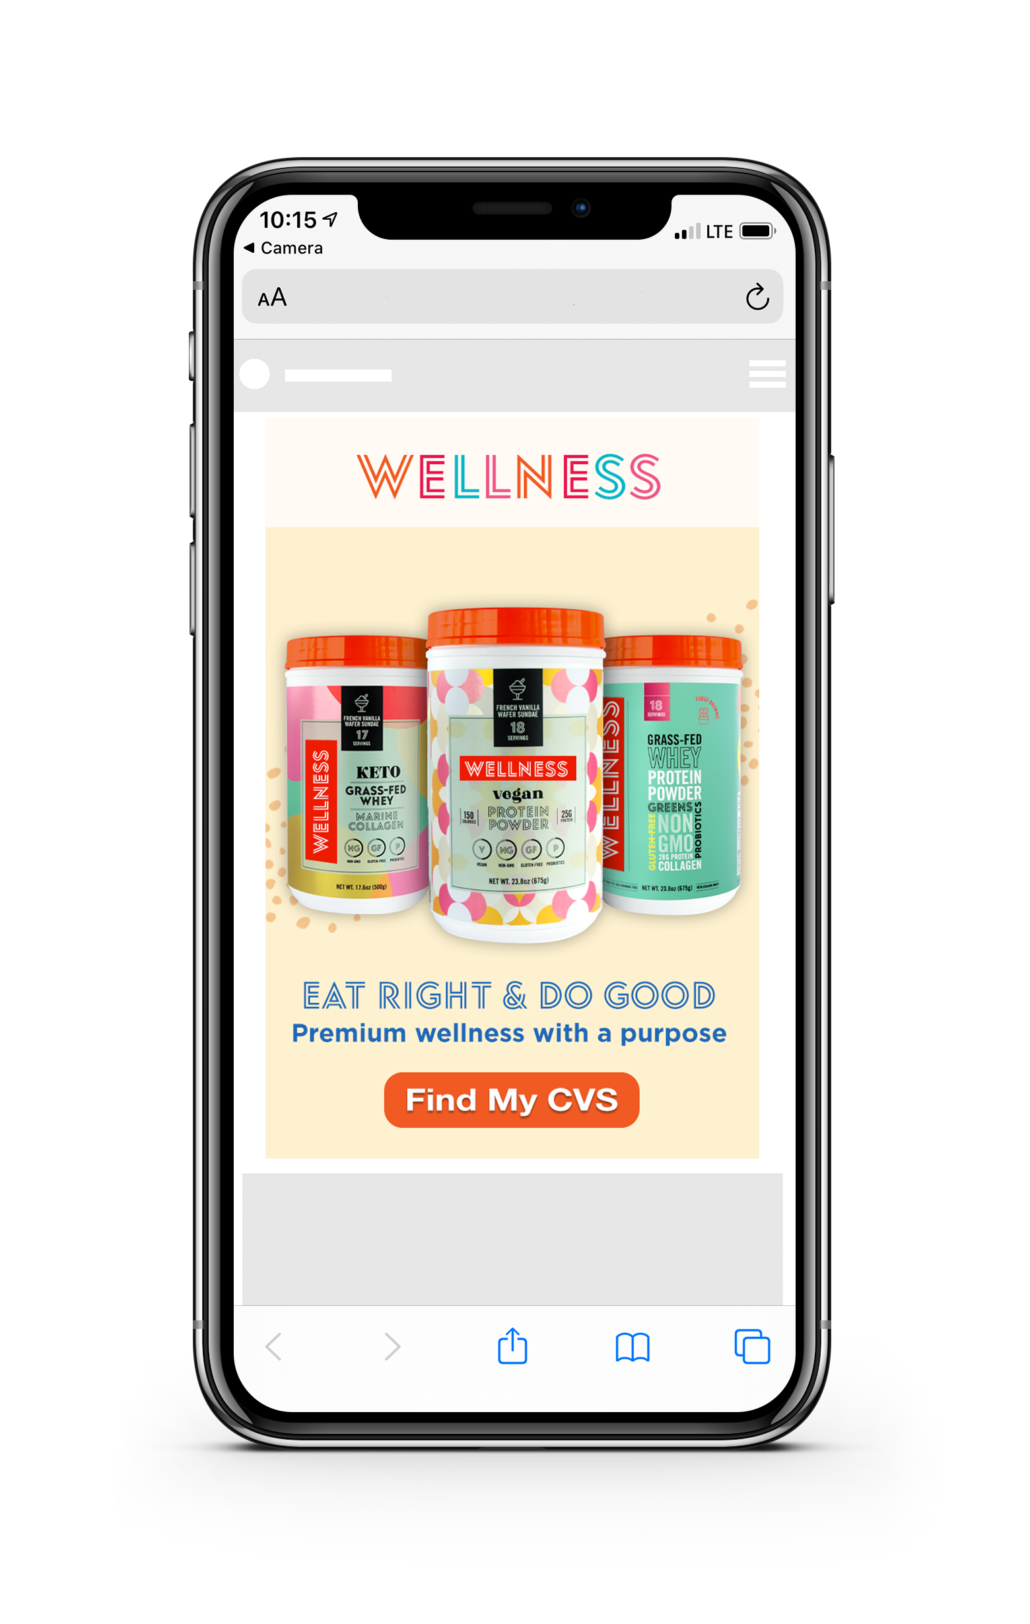 Wellness Mobile advertisement